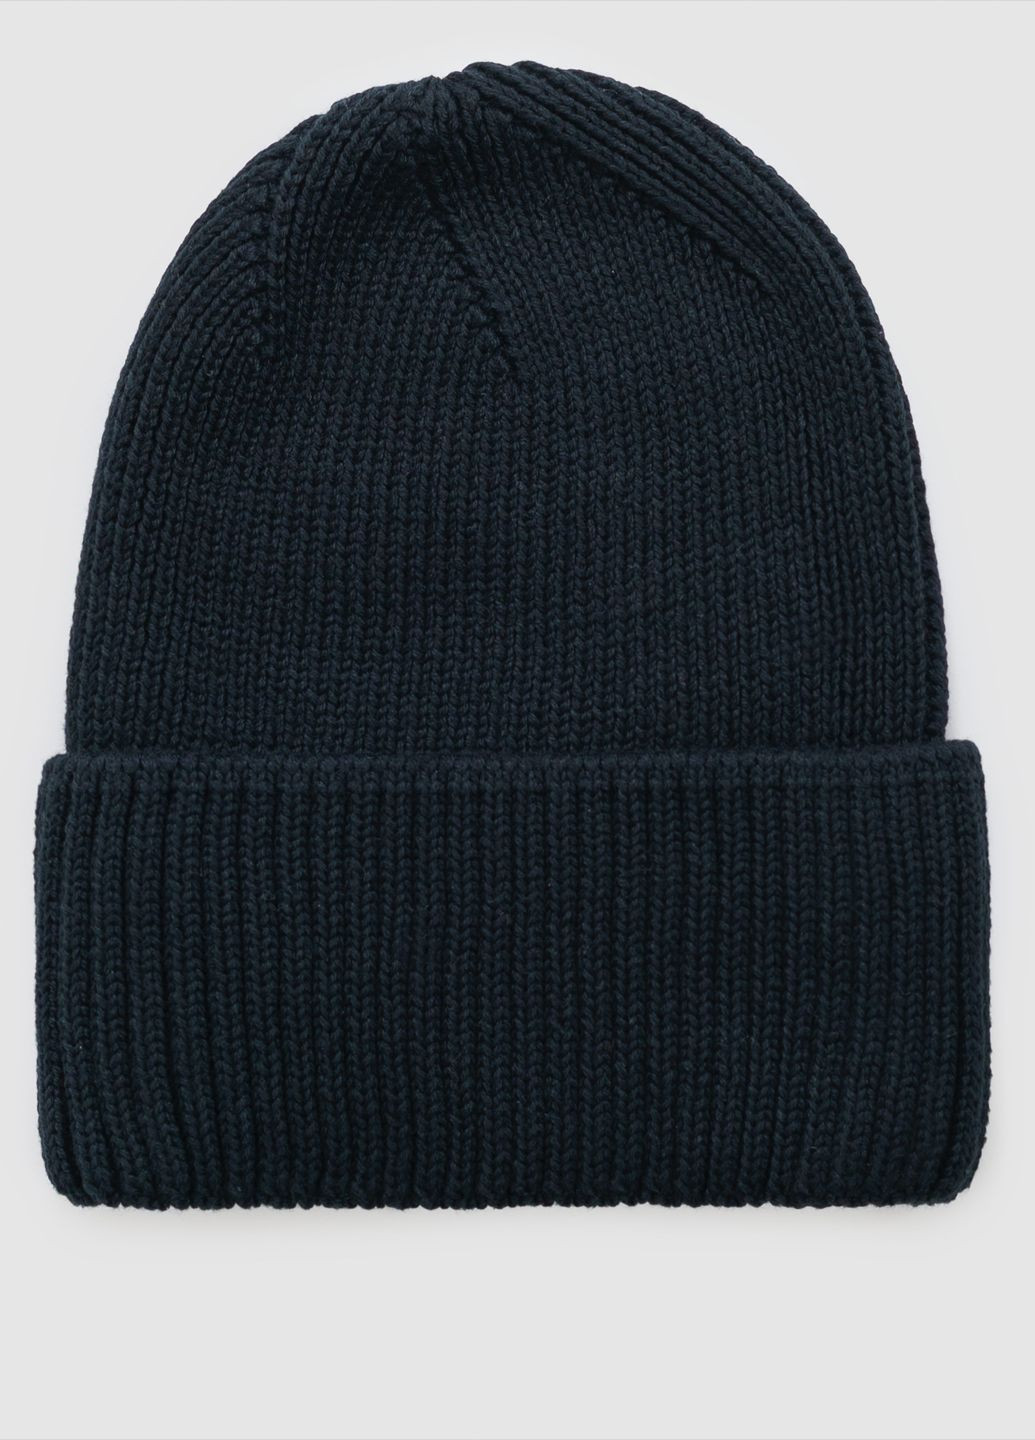 Шапка жіноча чорна Arber шапка w5 rib2*2 (285791828)